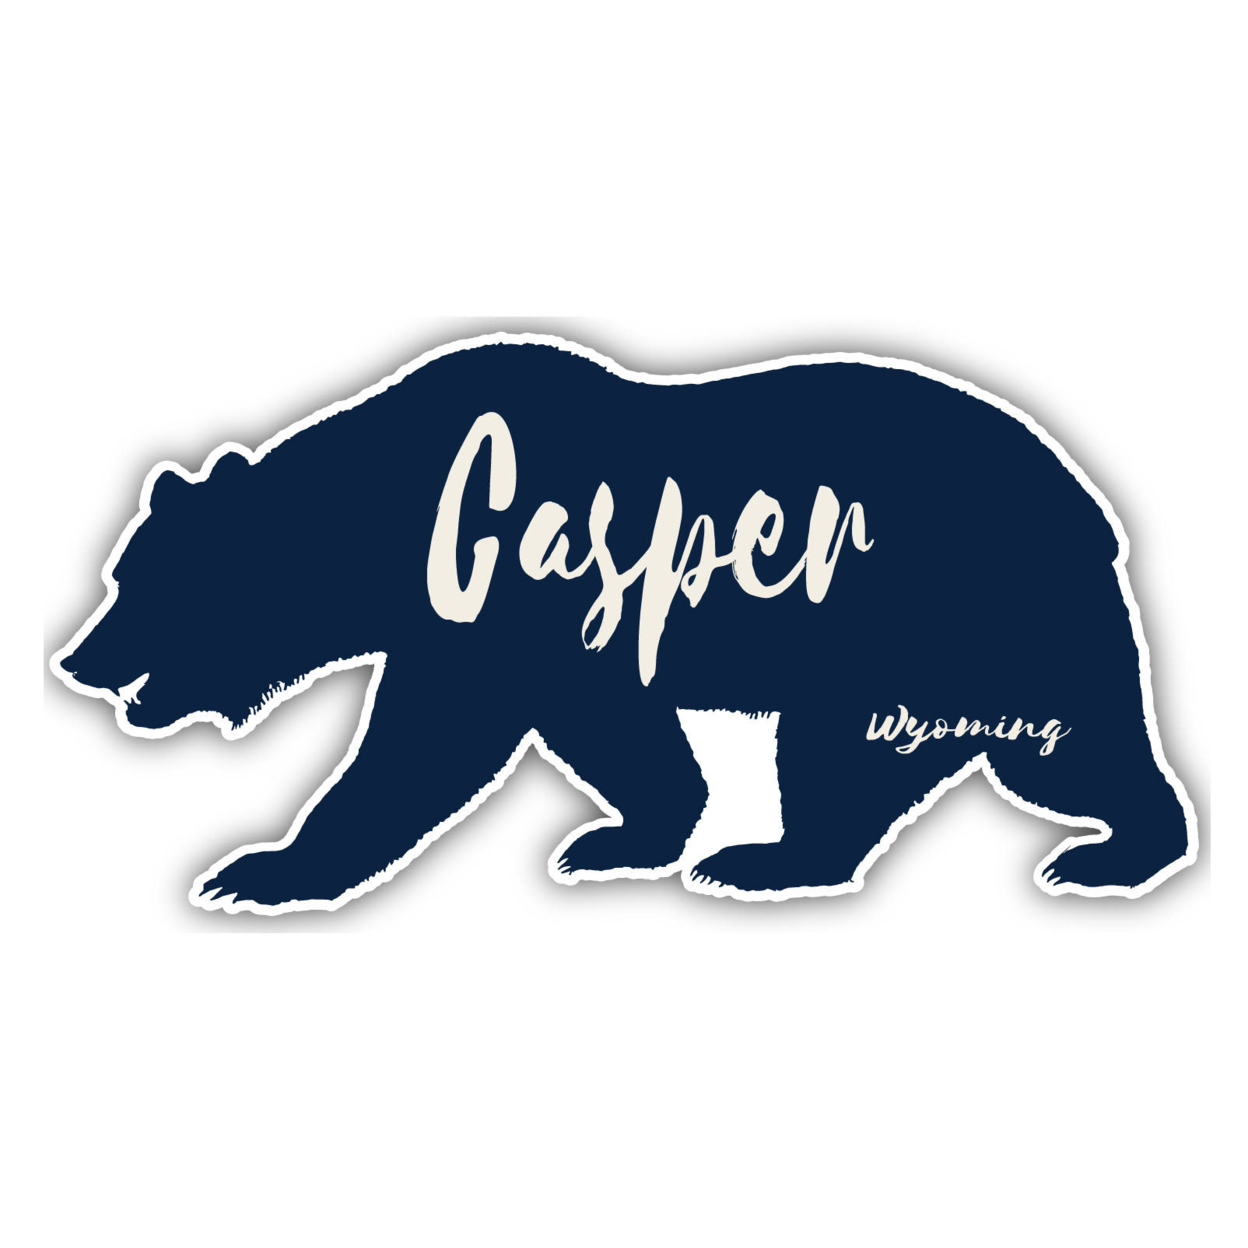 Casper Wyoming Souvenir Decorative Stickers (Choose Theme And Size) - Single Unit, 2-Inch, Bear